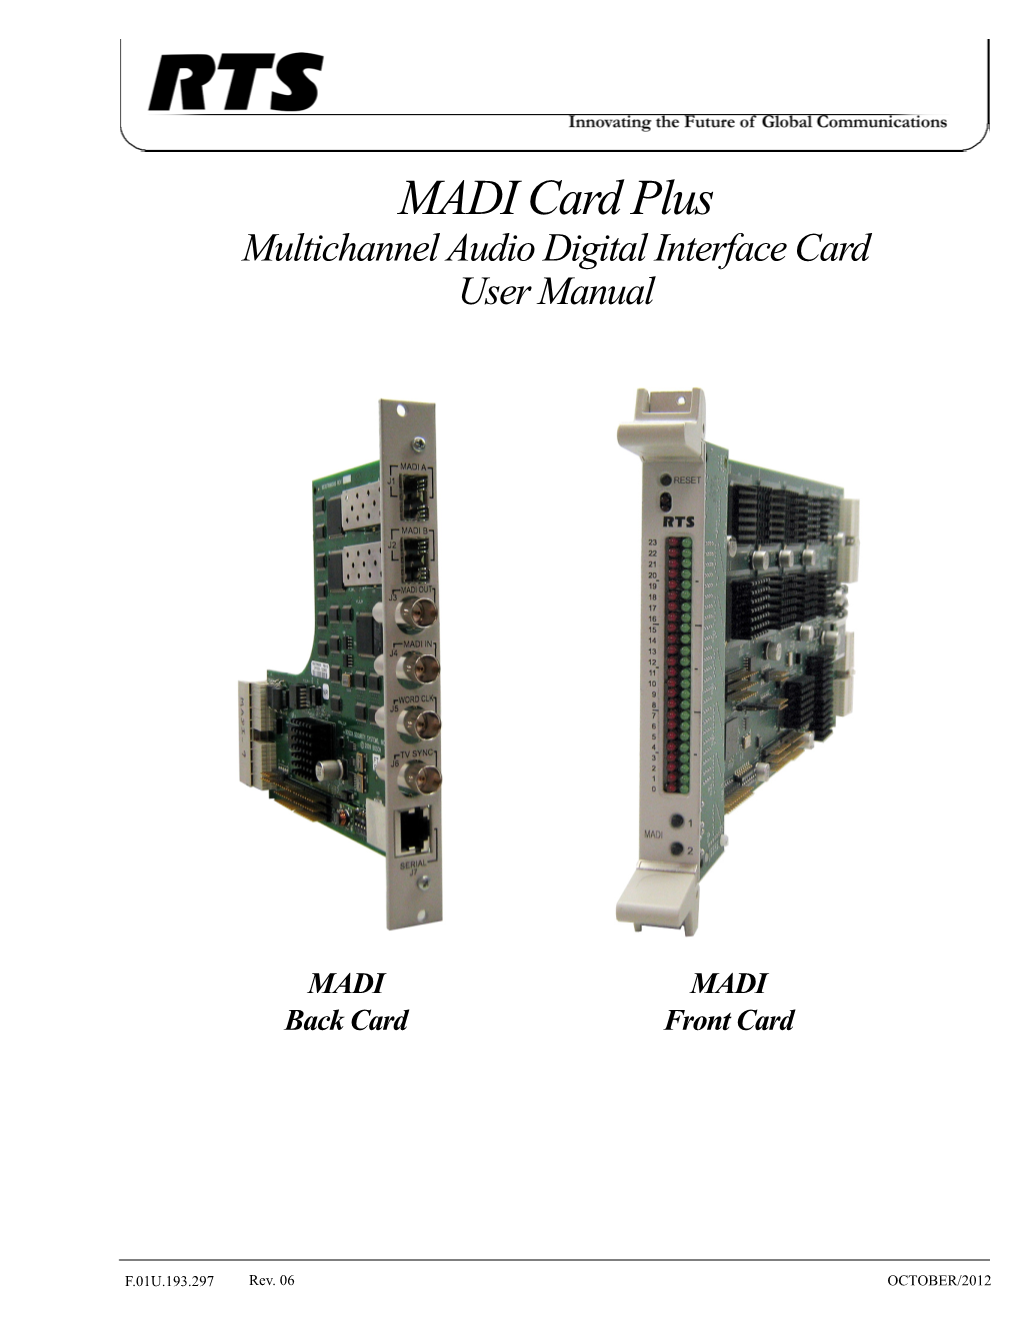 MADI Card Plus Multichannel Audio Digital Interface Card User Manual